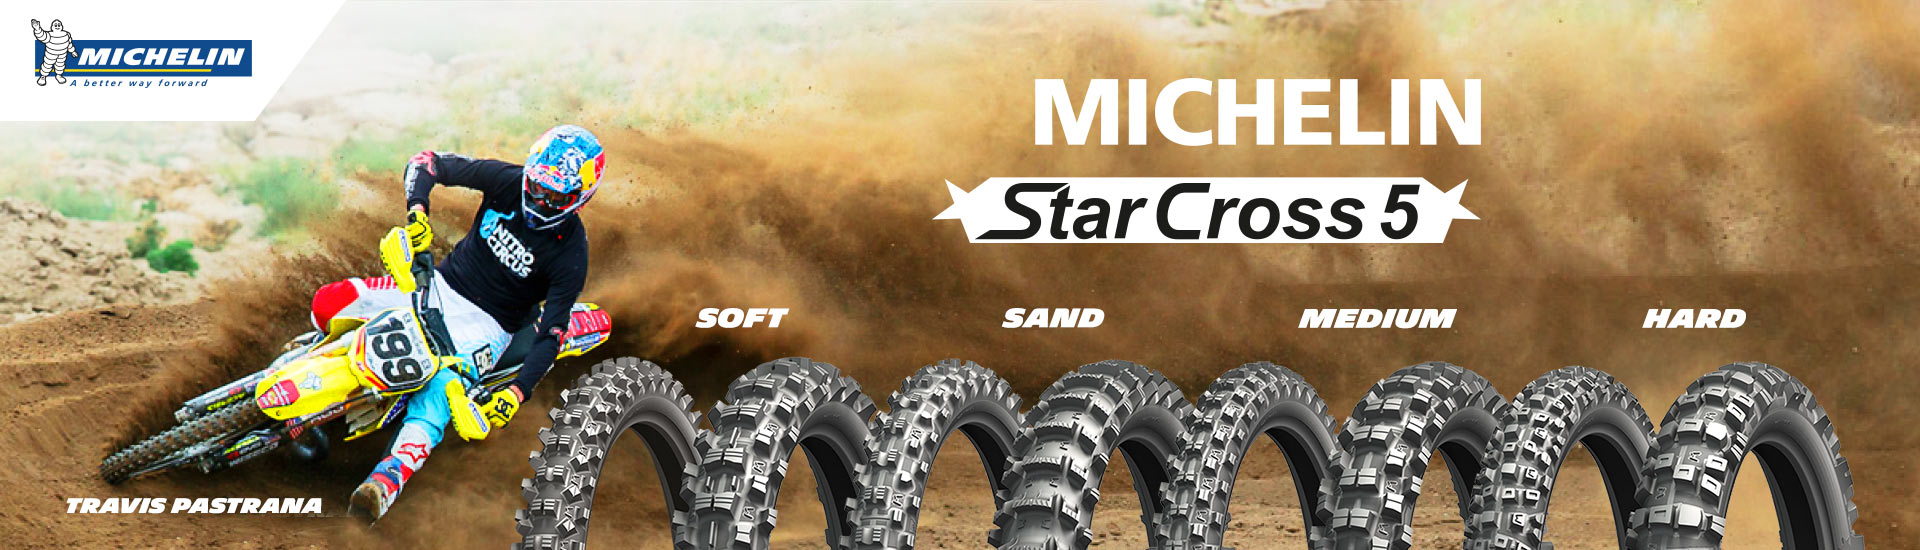 michelin-starcross-5-slider-2